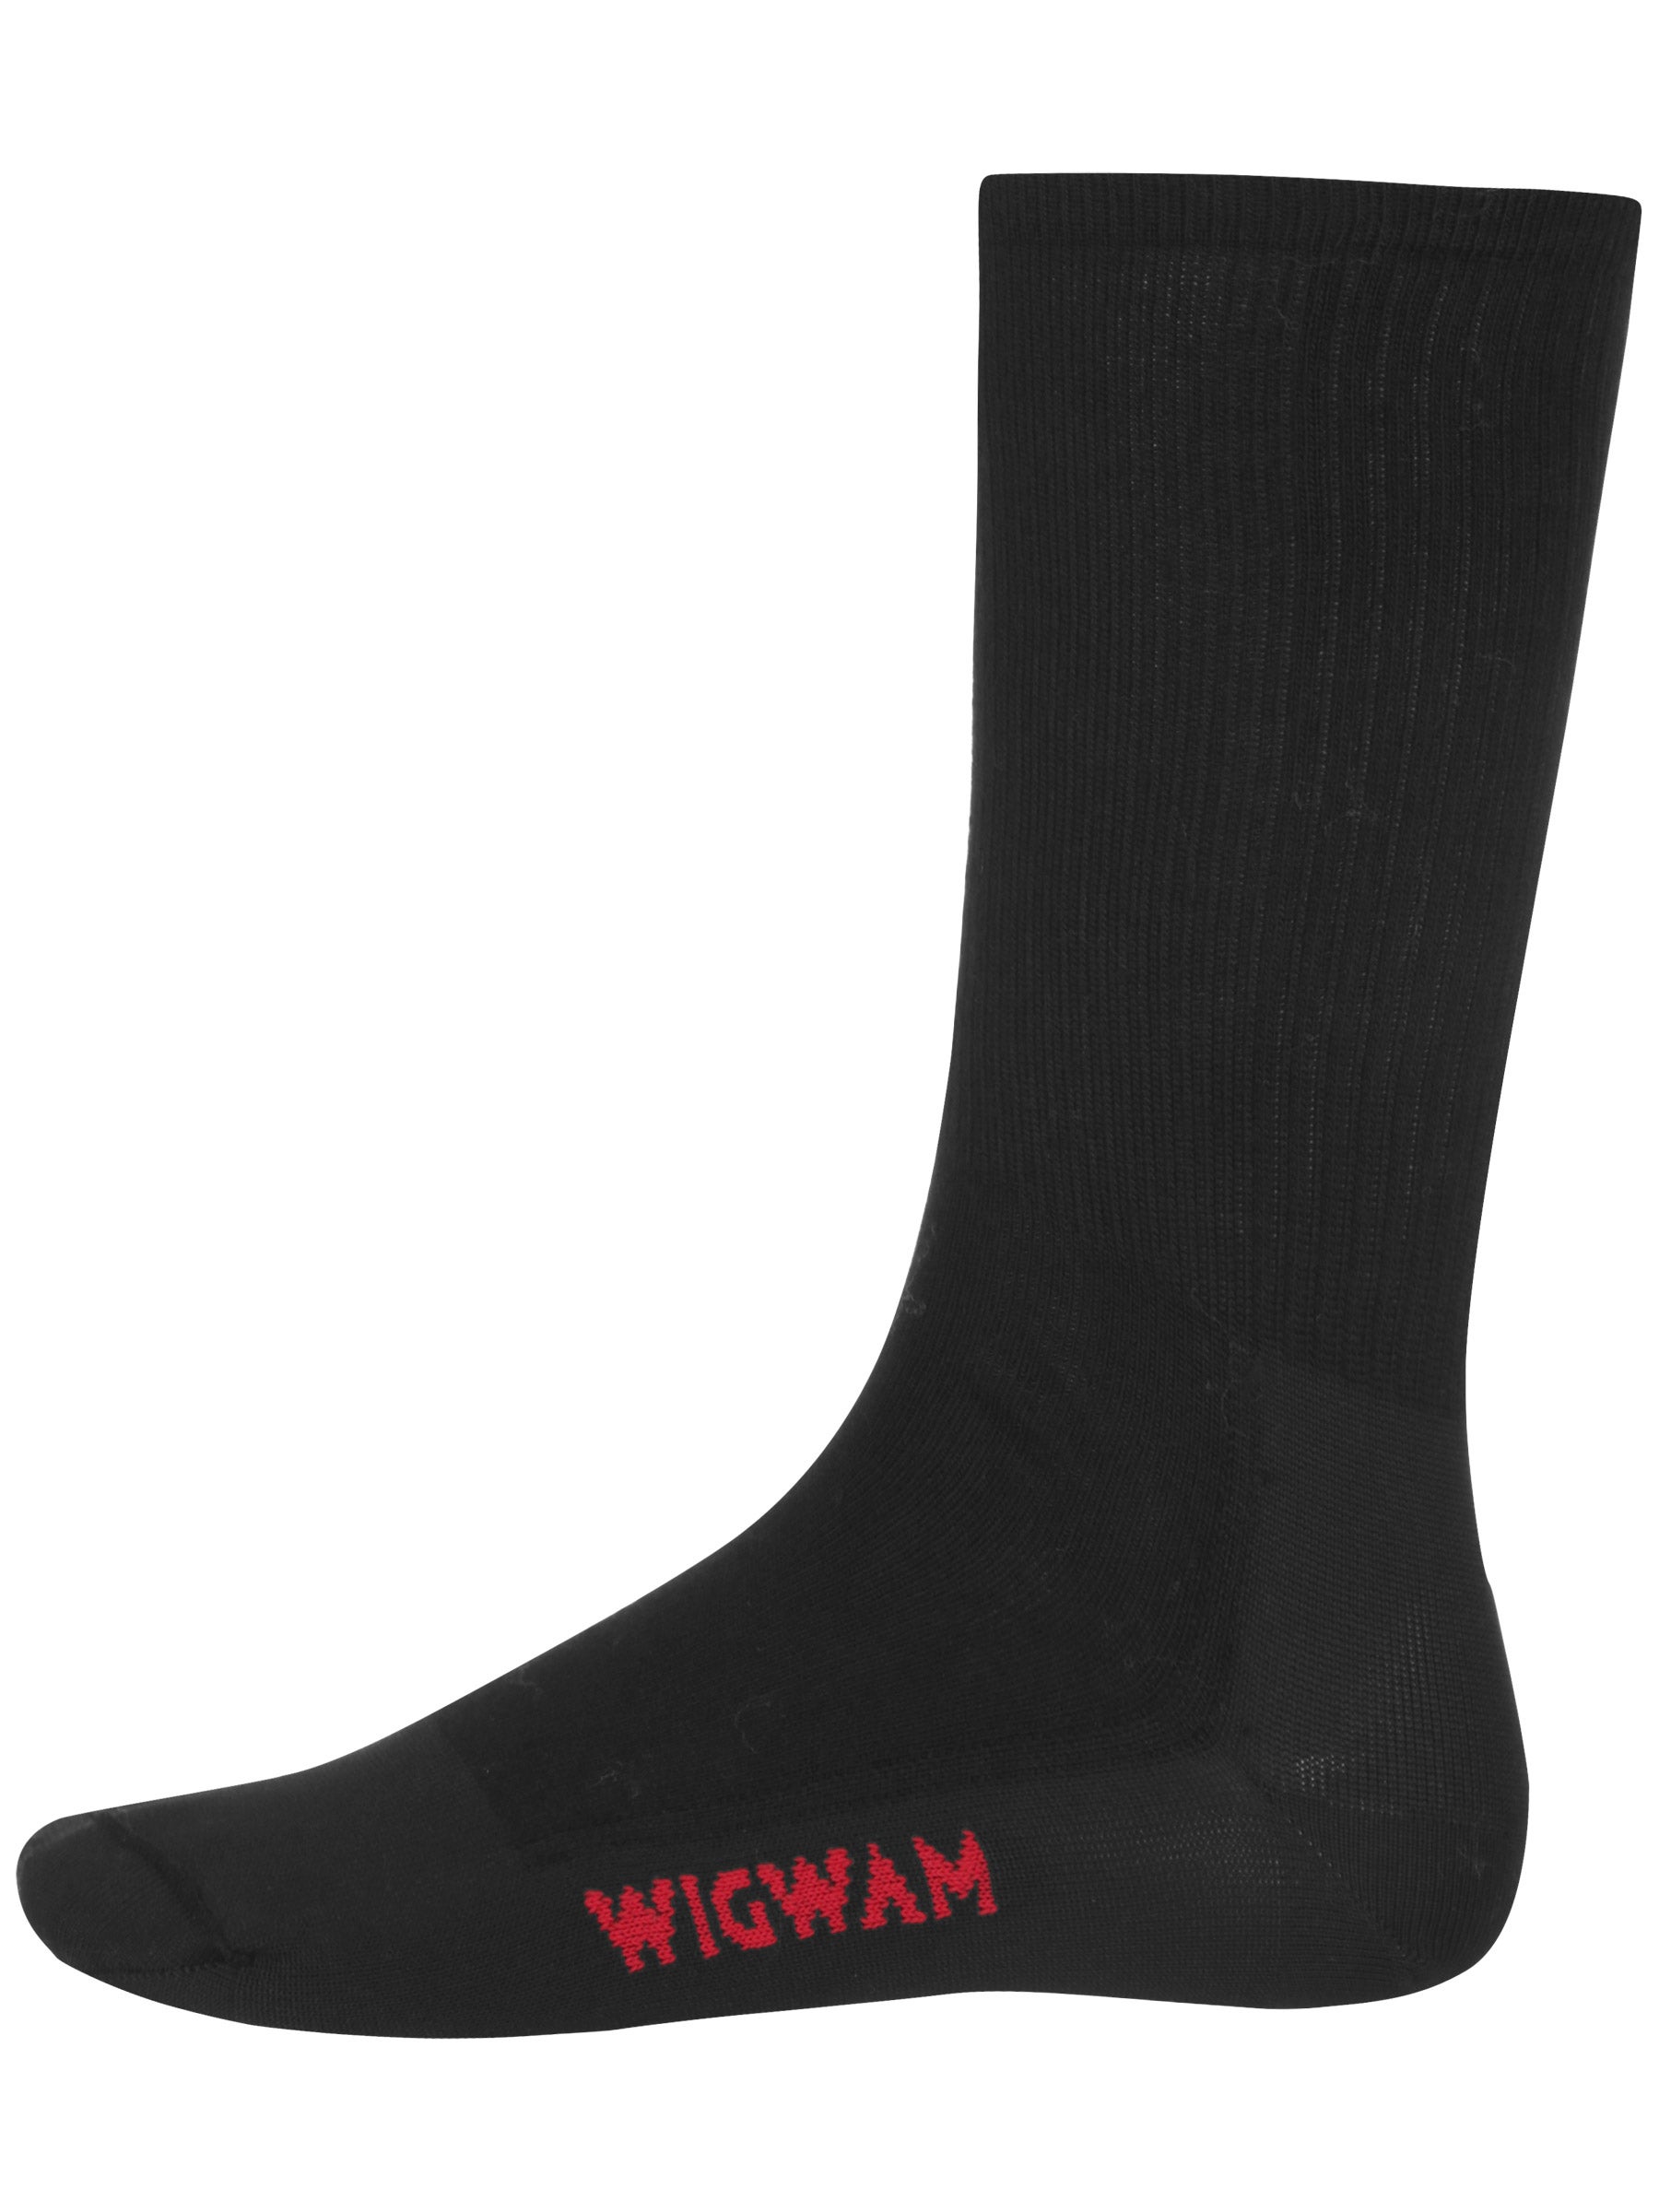 Wigwam F6089 UltimateLiner Pro Black MS